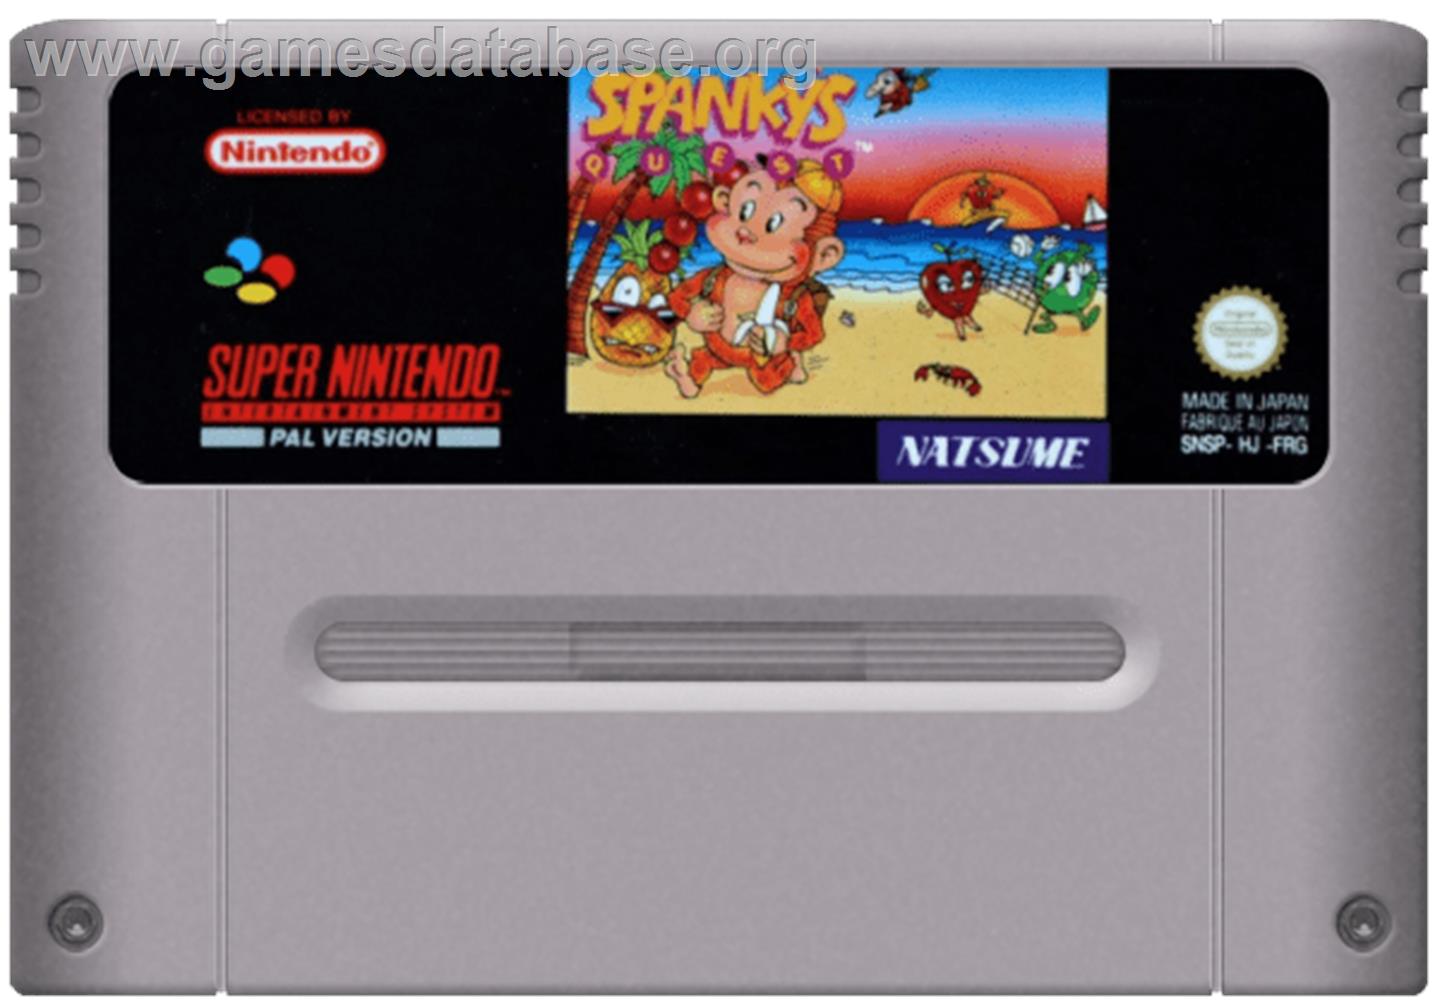 Spanky's Quest - Nintendo SNES - Artwork - Cartridge